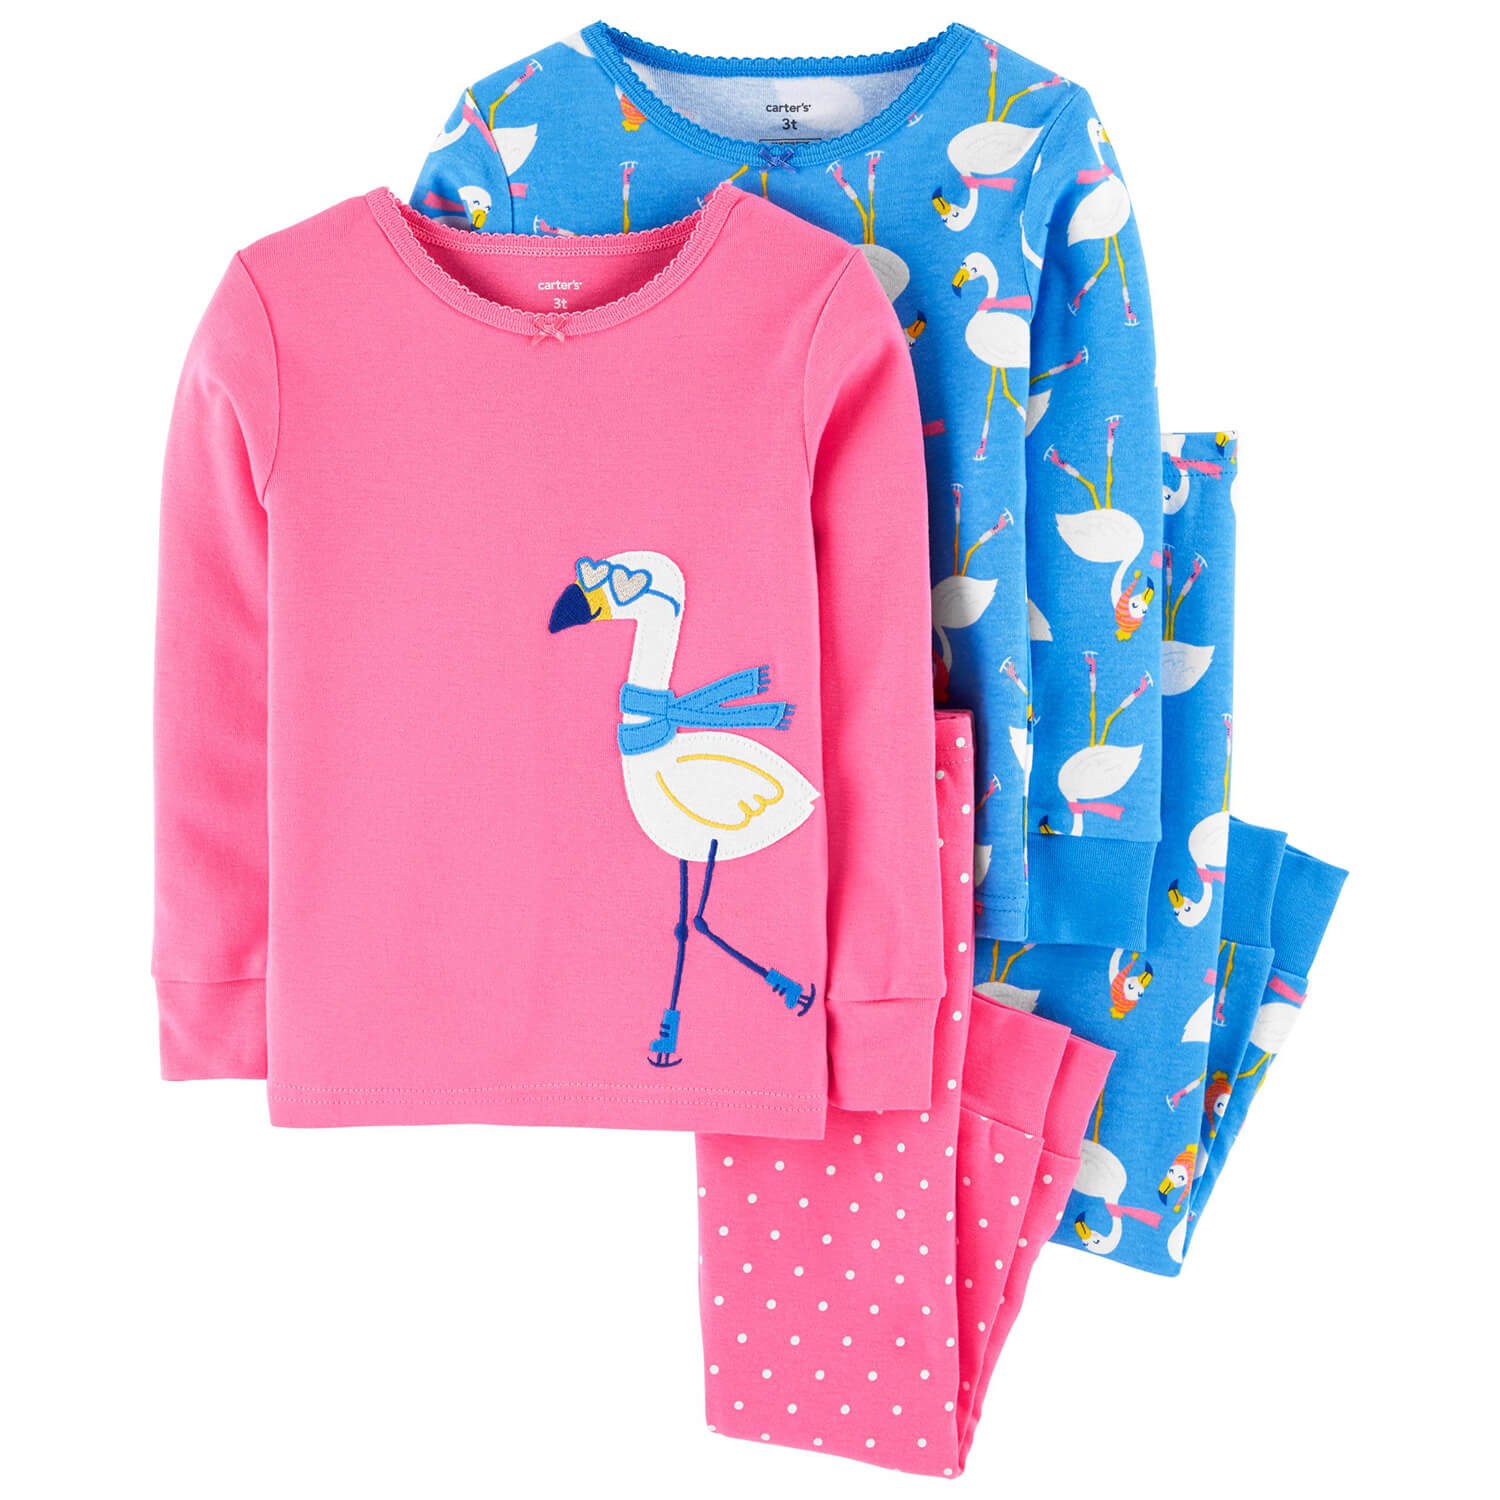 Carter's Flamingo 4'lü Çocuk Pijama Takımı Pembe-Mavi